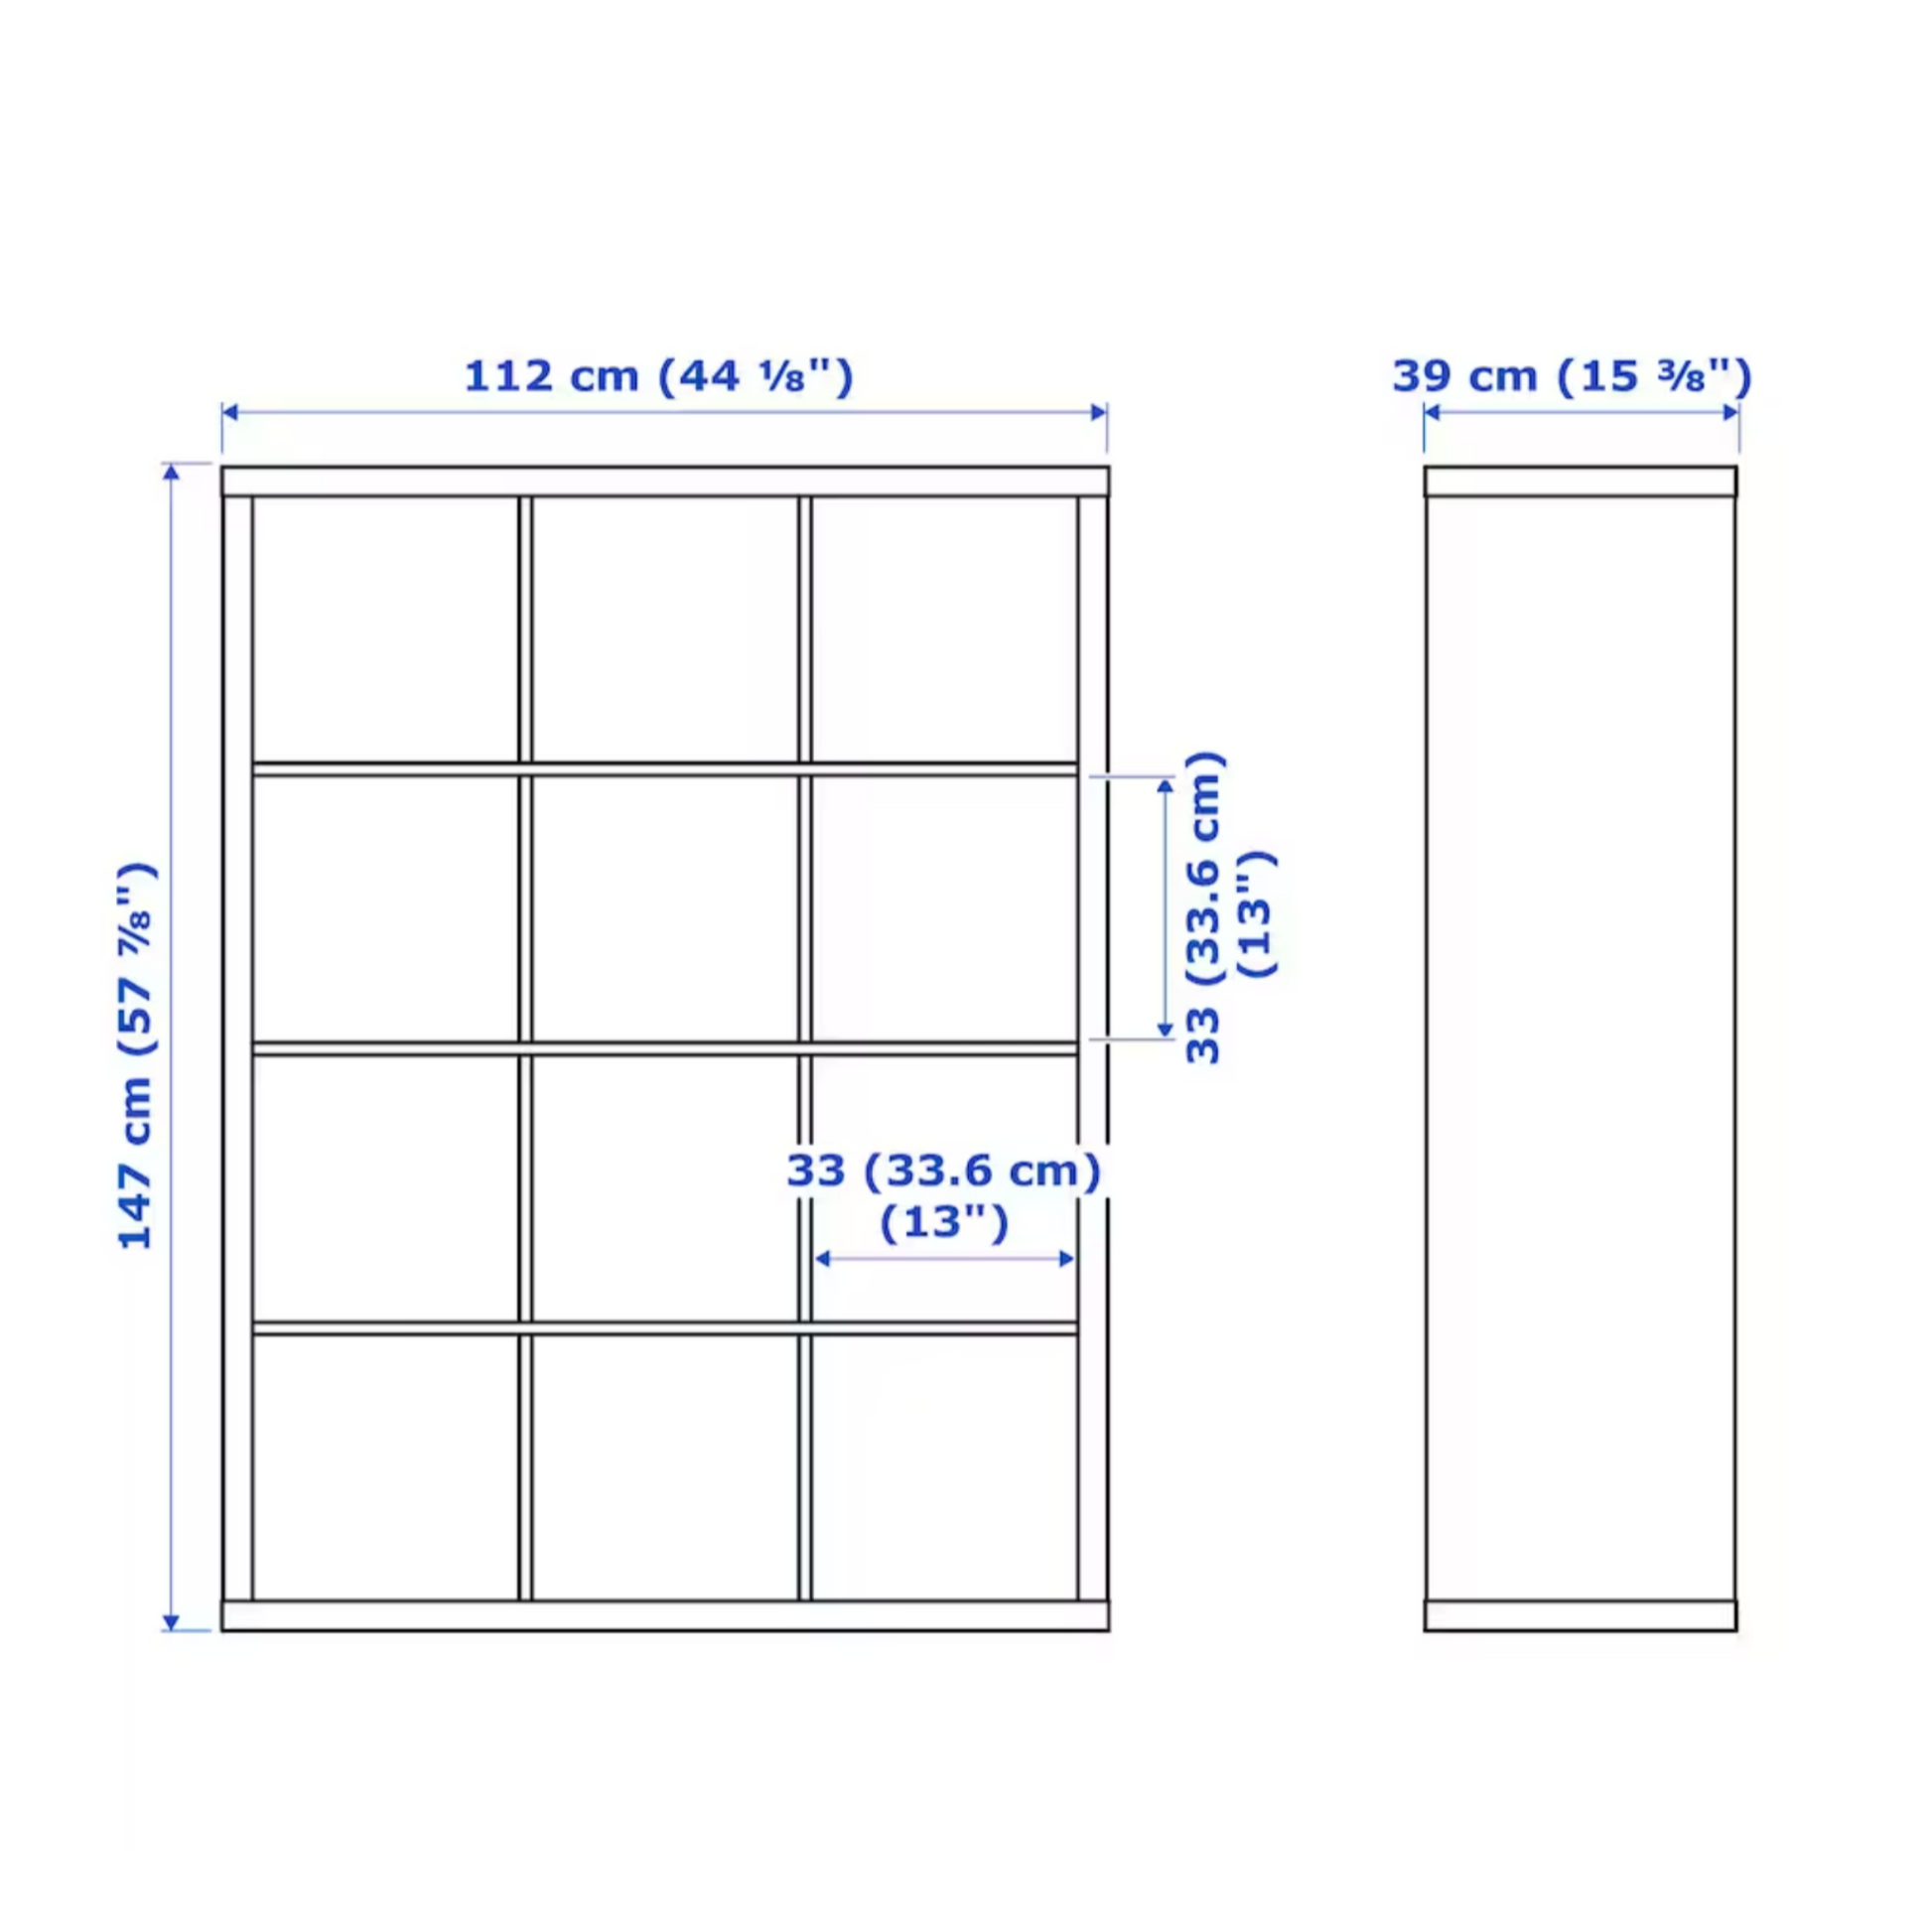 IKEA Kallax 3x4 Shelving Unit, 112x147cm, Black/Brown (4616814264385)